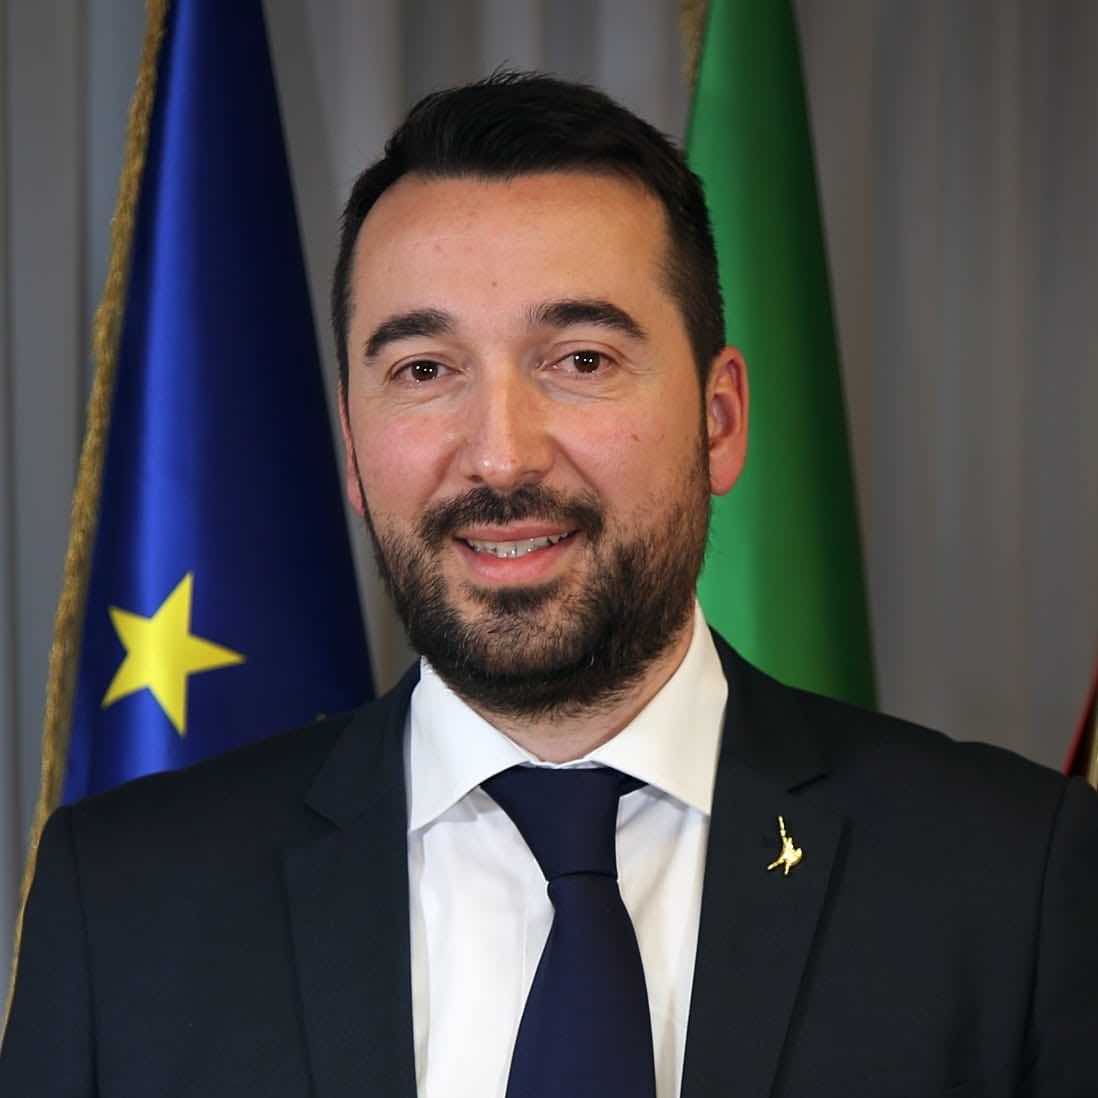 L'assessore regionale Nicola Campitelli passa a Fratelli d'Italia